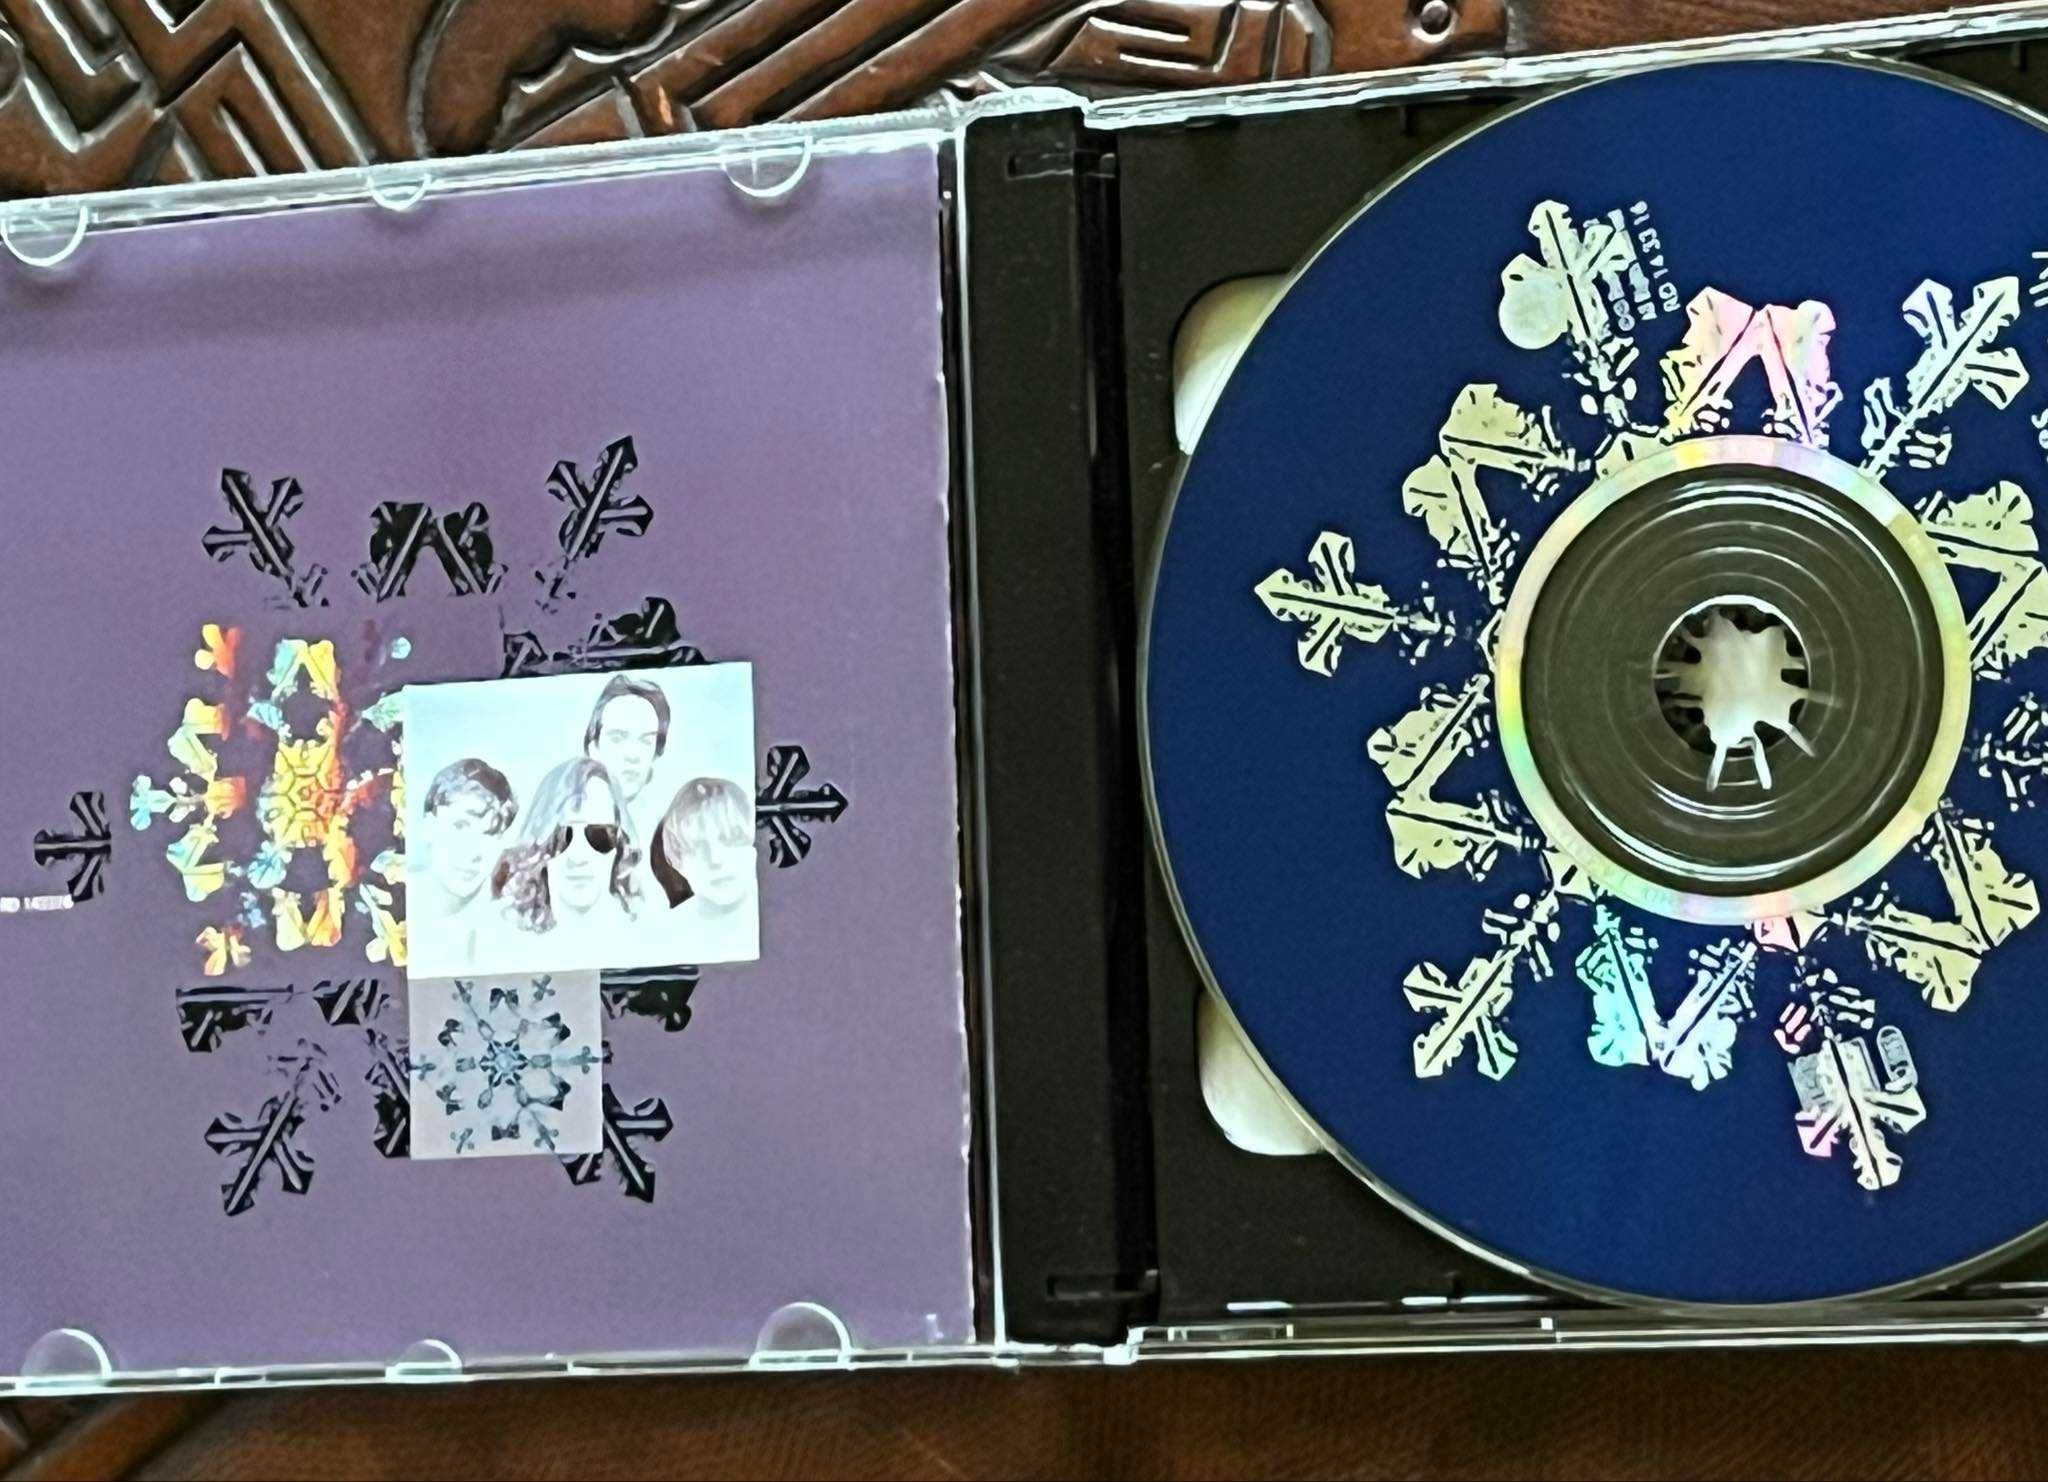 Shiny Gnomes - Yours Gnomefully Vol.I - CD - EX!